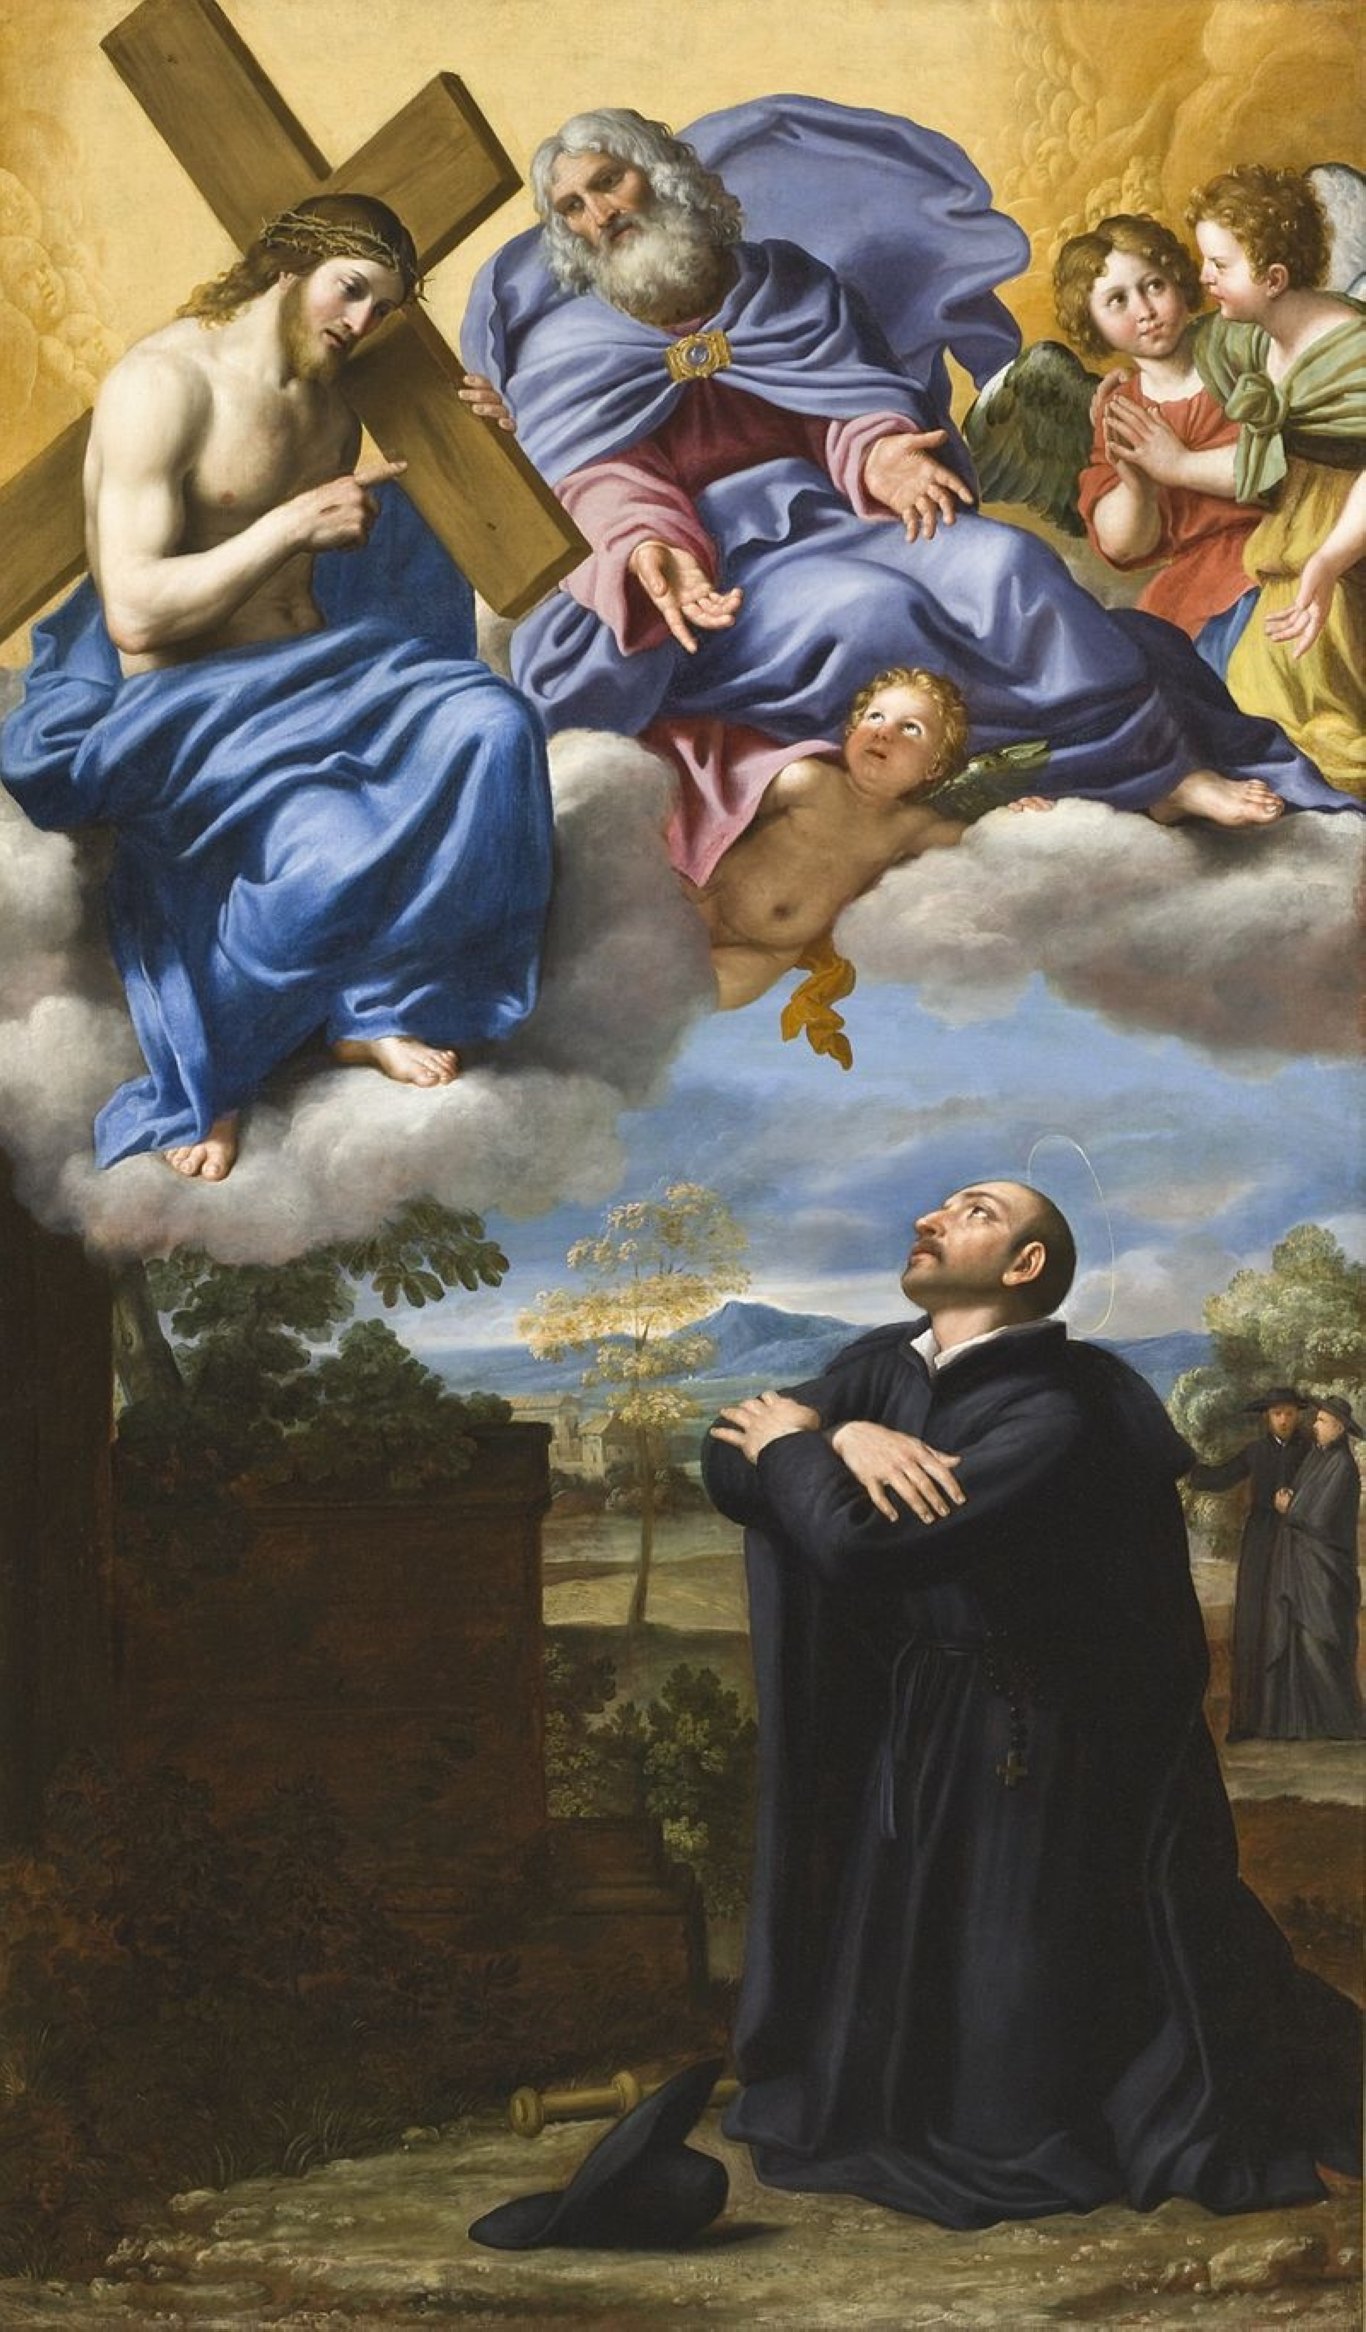 'Saint Ignatius of Loyola's Vision of Christ and God' by Domenichino. (Wikimedia)